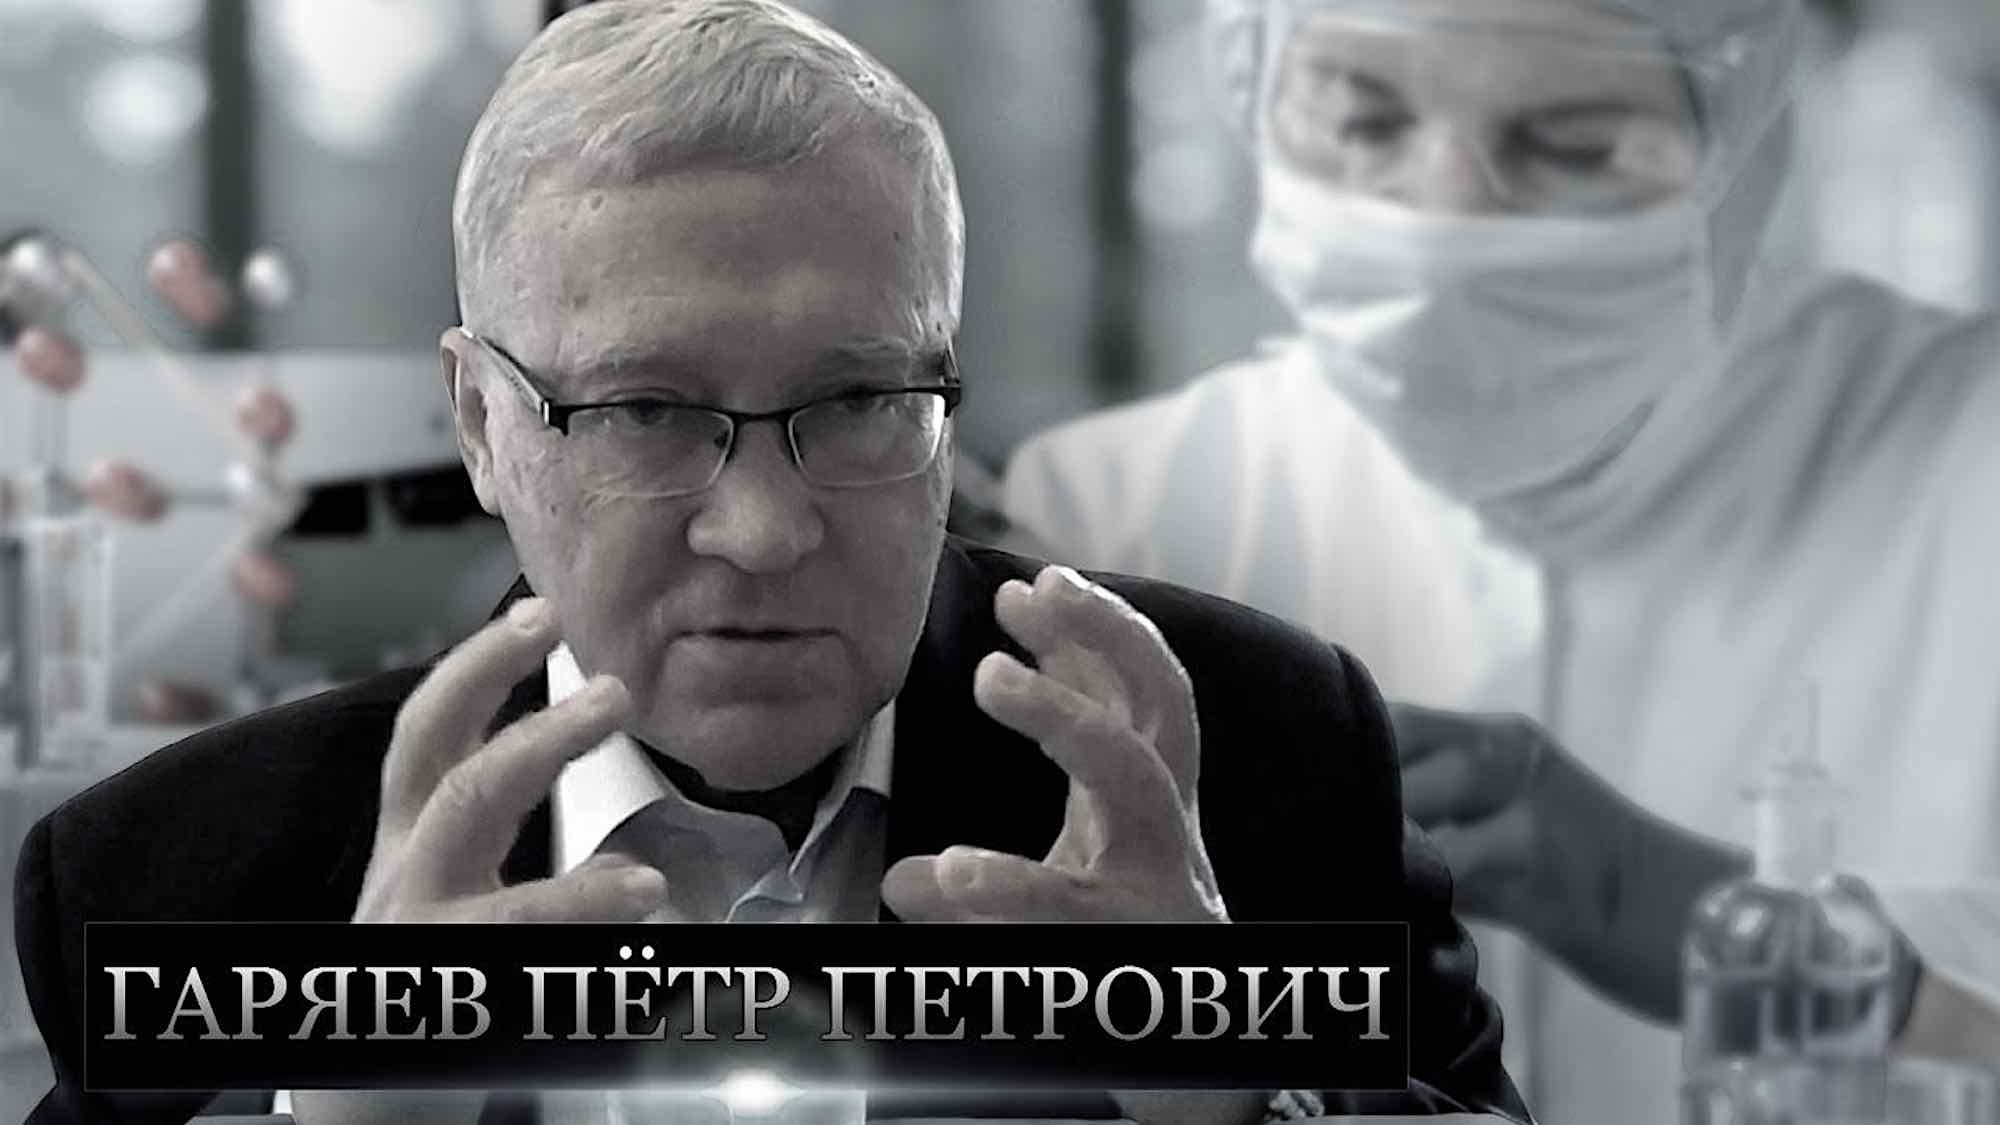 Dr- Peter Gariaev